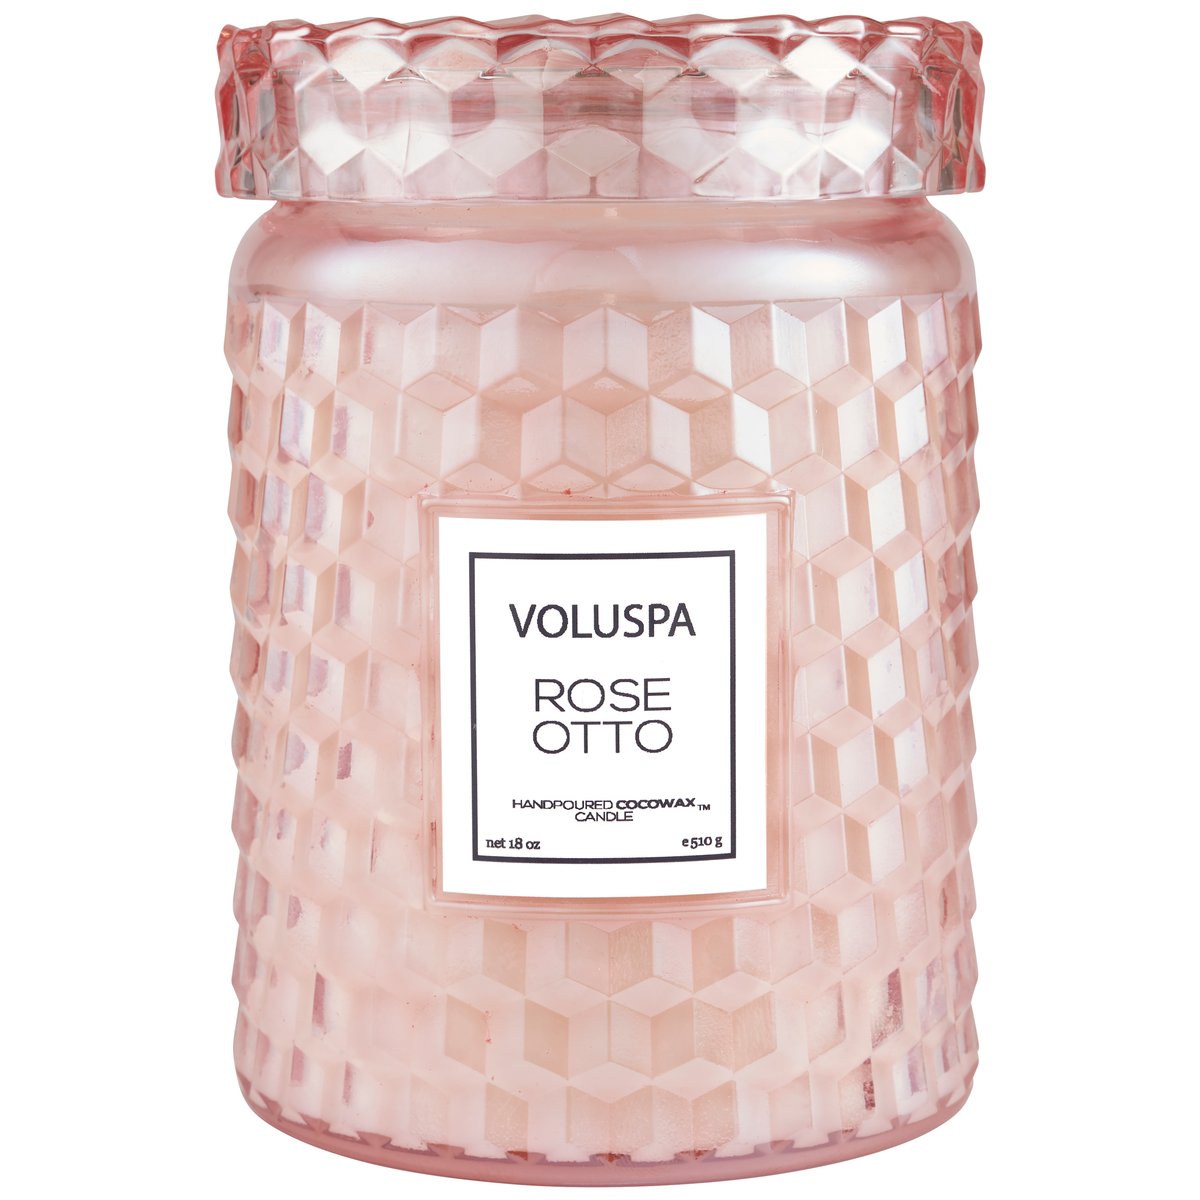 Voluspa - 18oz Large Jar Candle - Rose Otto